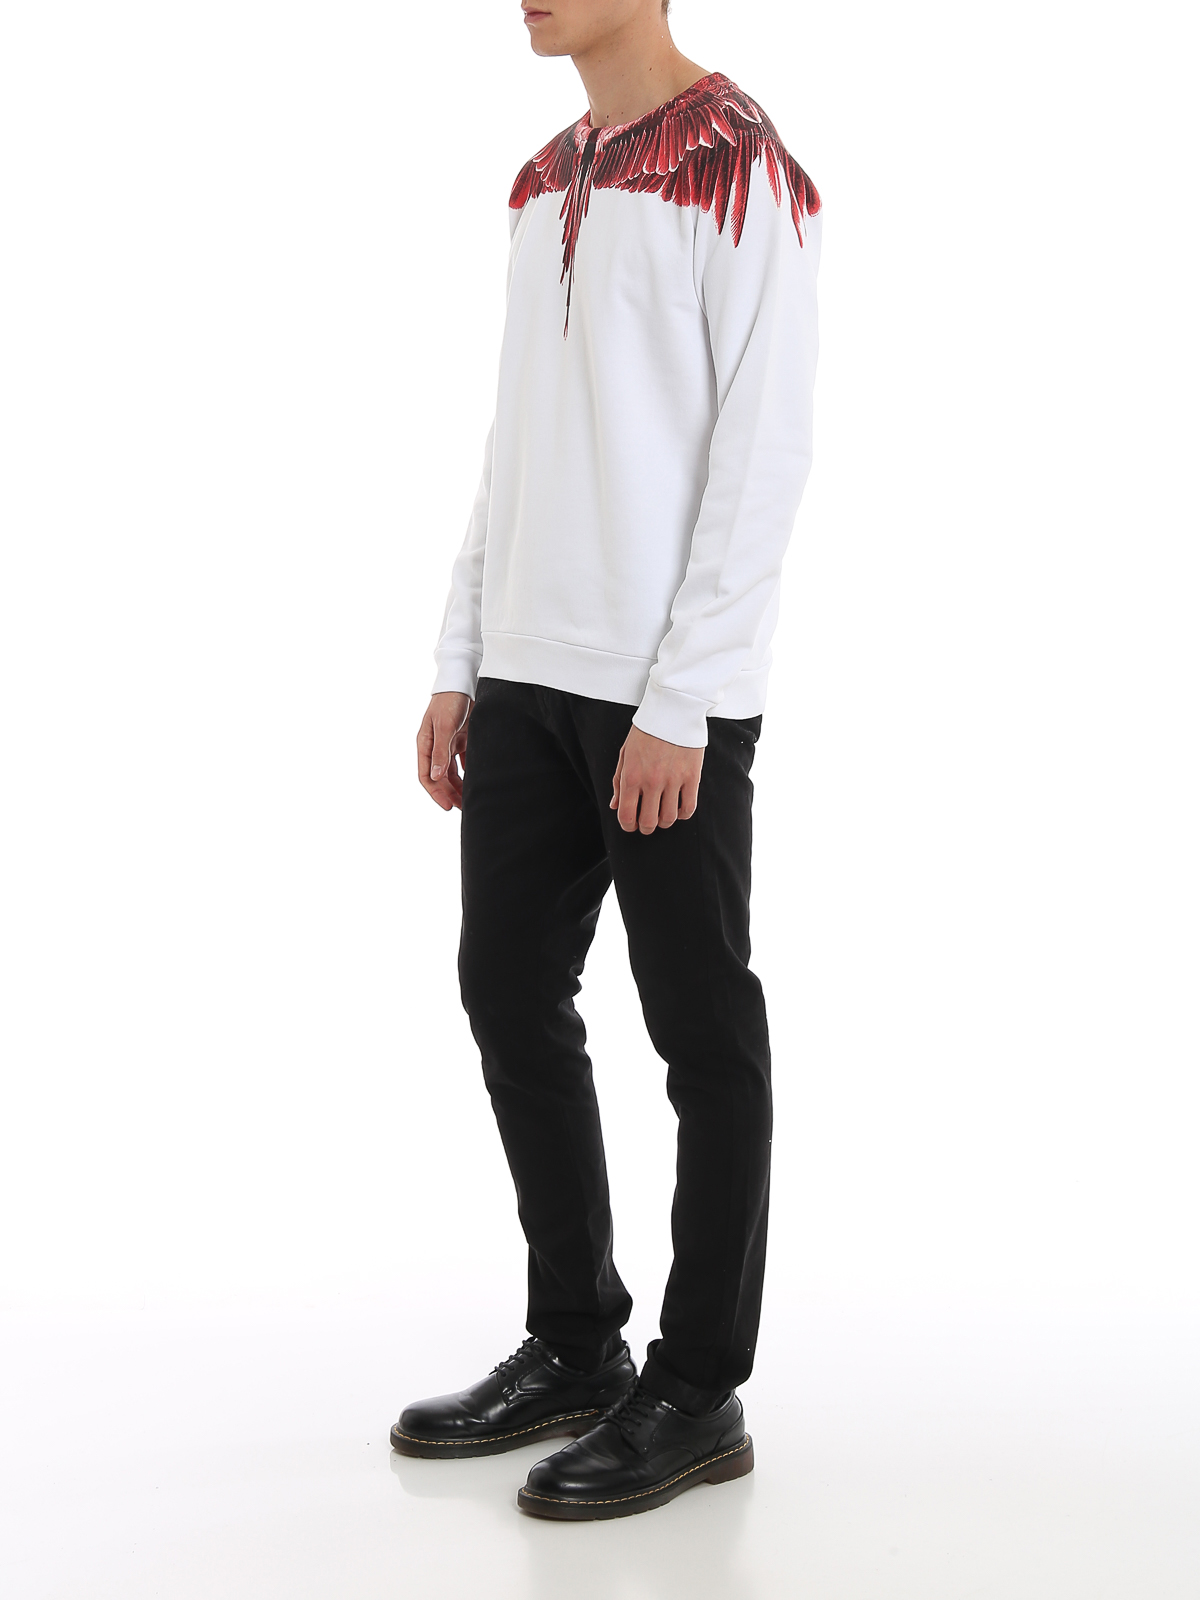 Sweatshirts & Sweaters Marcelo Burlon - Red Ghost white sweatshirt - CMBA009E196300030188